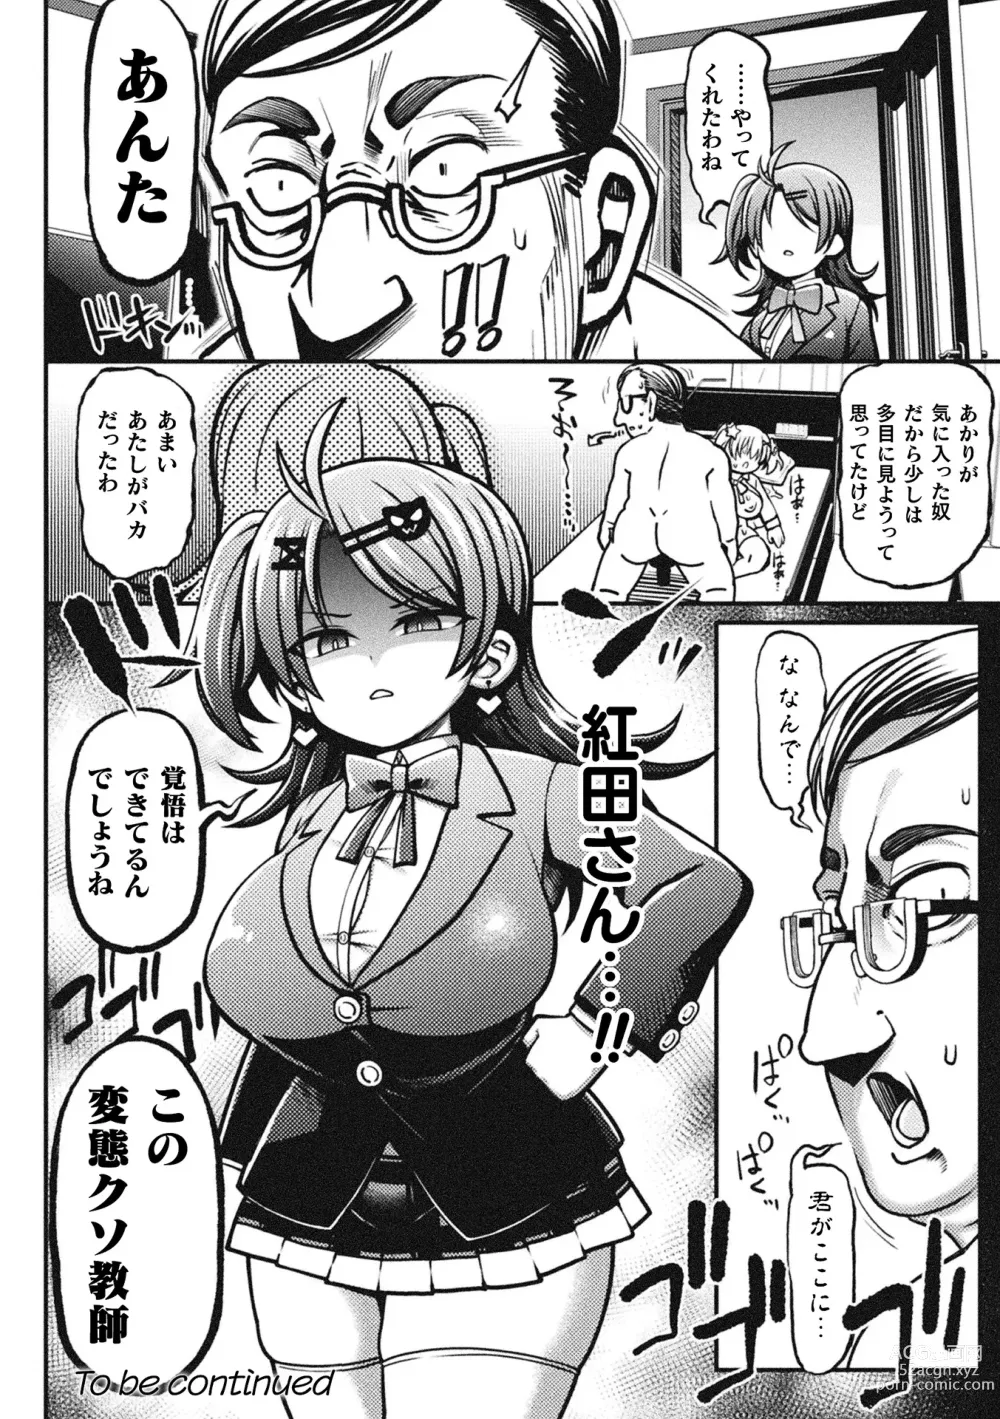 Page 32 of manga Mesugaki Wakara se Game! Episode 1